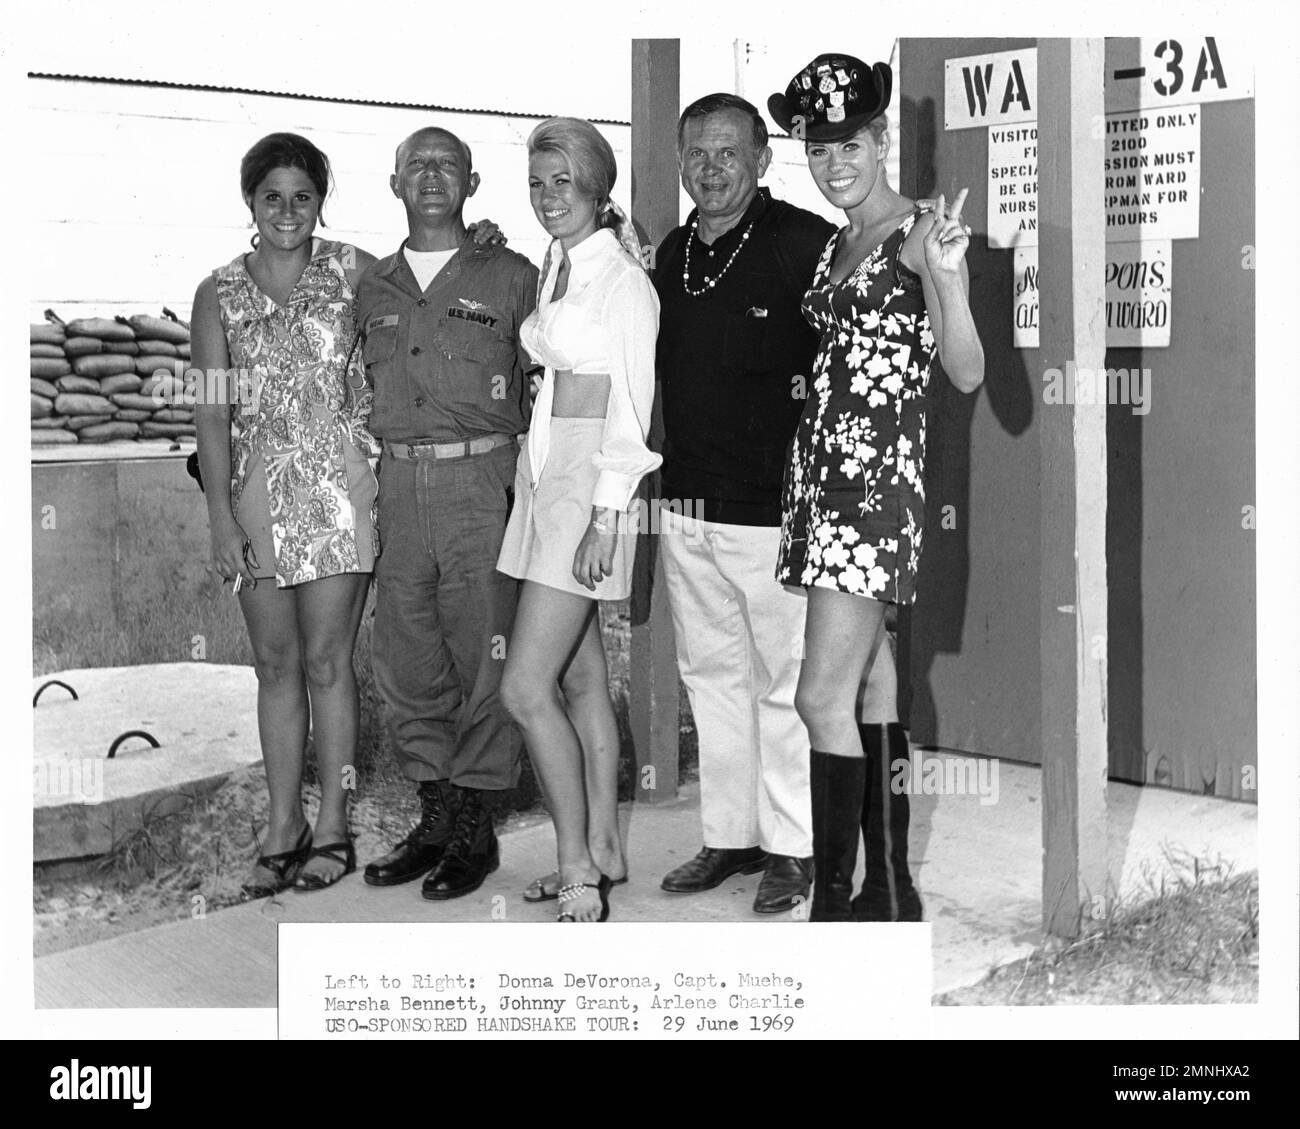 [Naval Support Activity Hospital Danang, Vietnam]. Von links nach rechts. Donna DeVorona, Kapitän Muehe, Marsha Bennett, Johnny Grant, Arlene Charles. VON USO gesponserte Handshake Tour ca. 29. Juni 1969 [Vietnamkrieg] Stockfoto